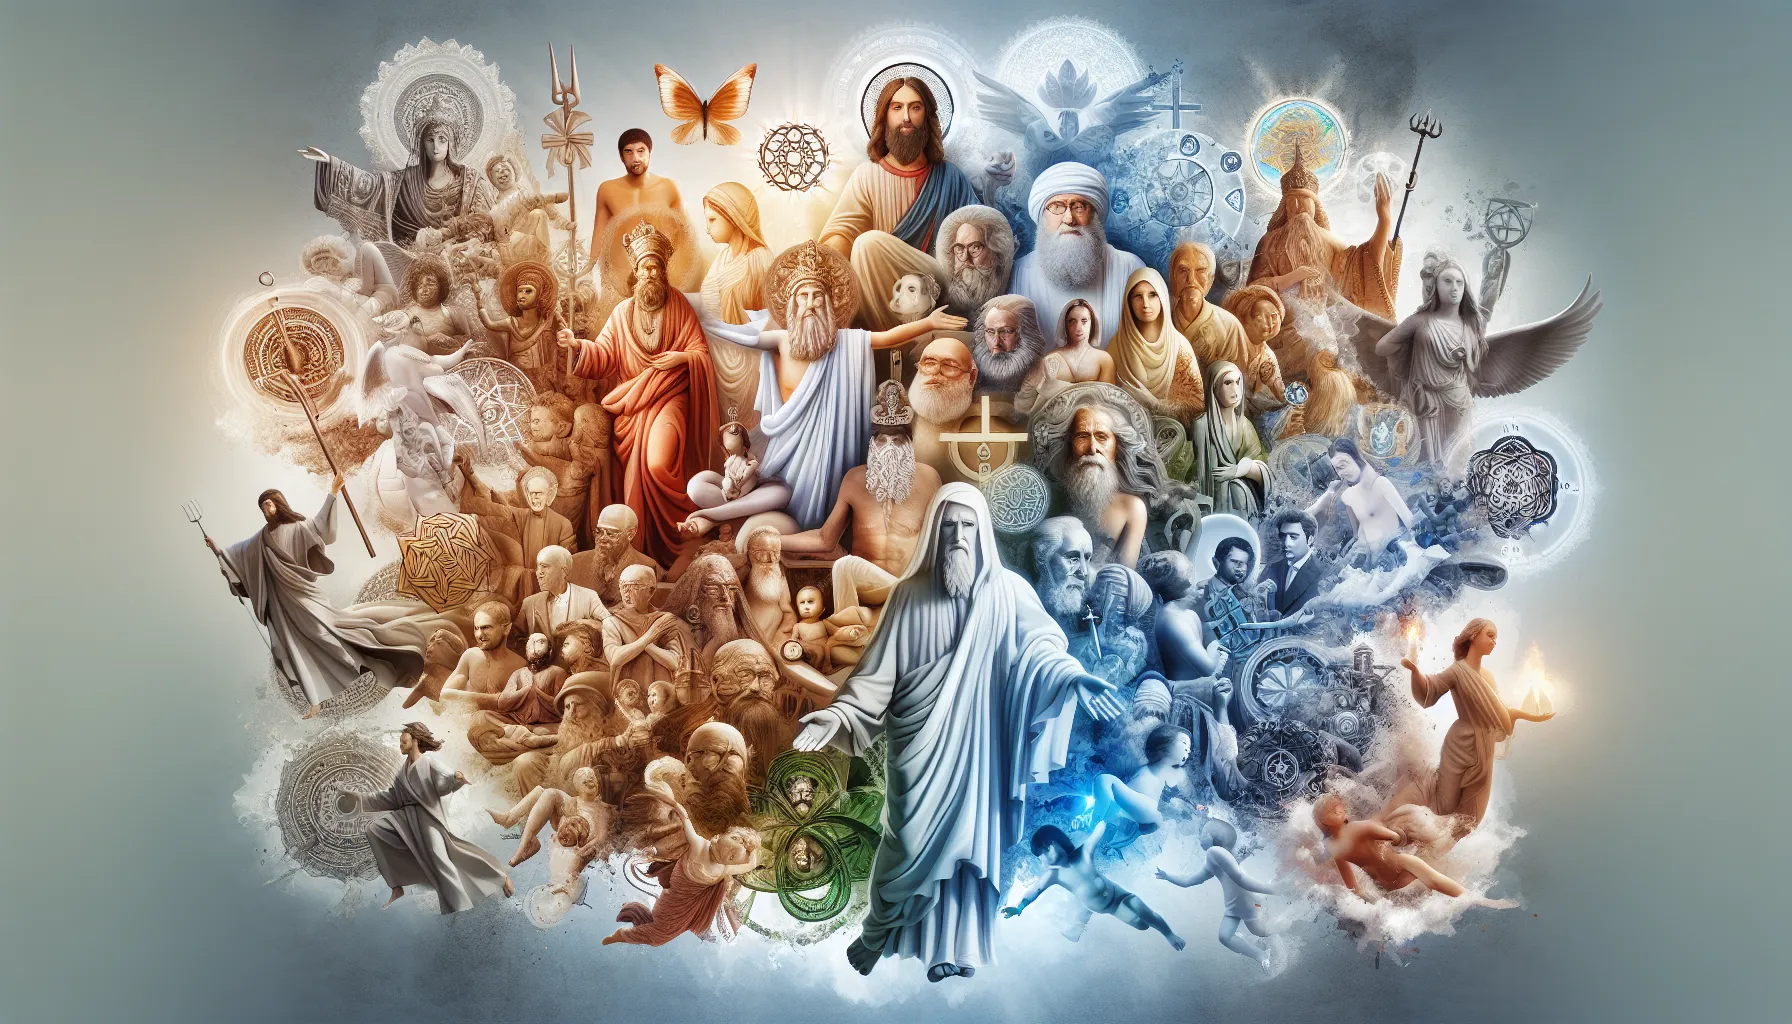 Imagen representativa de diversas figuras religiosas fusionadas